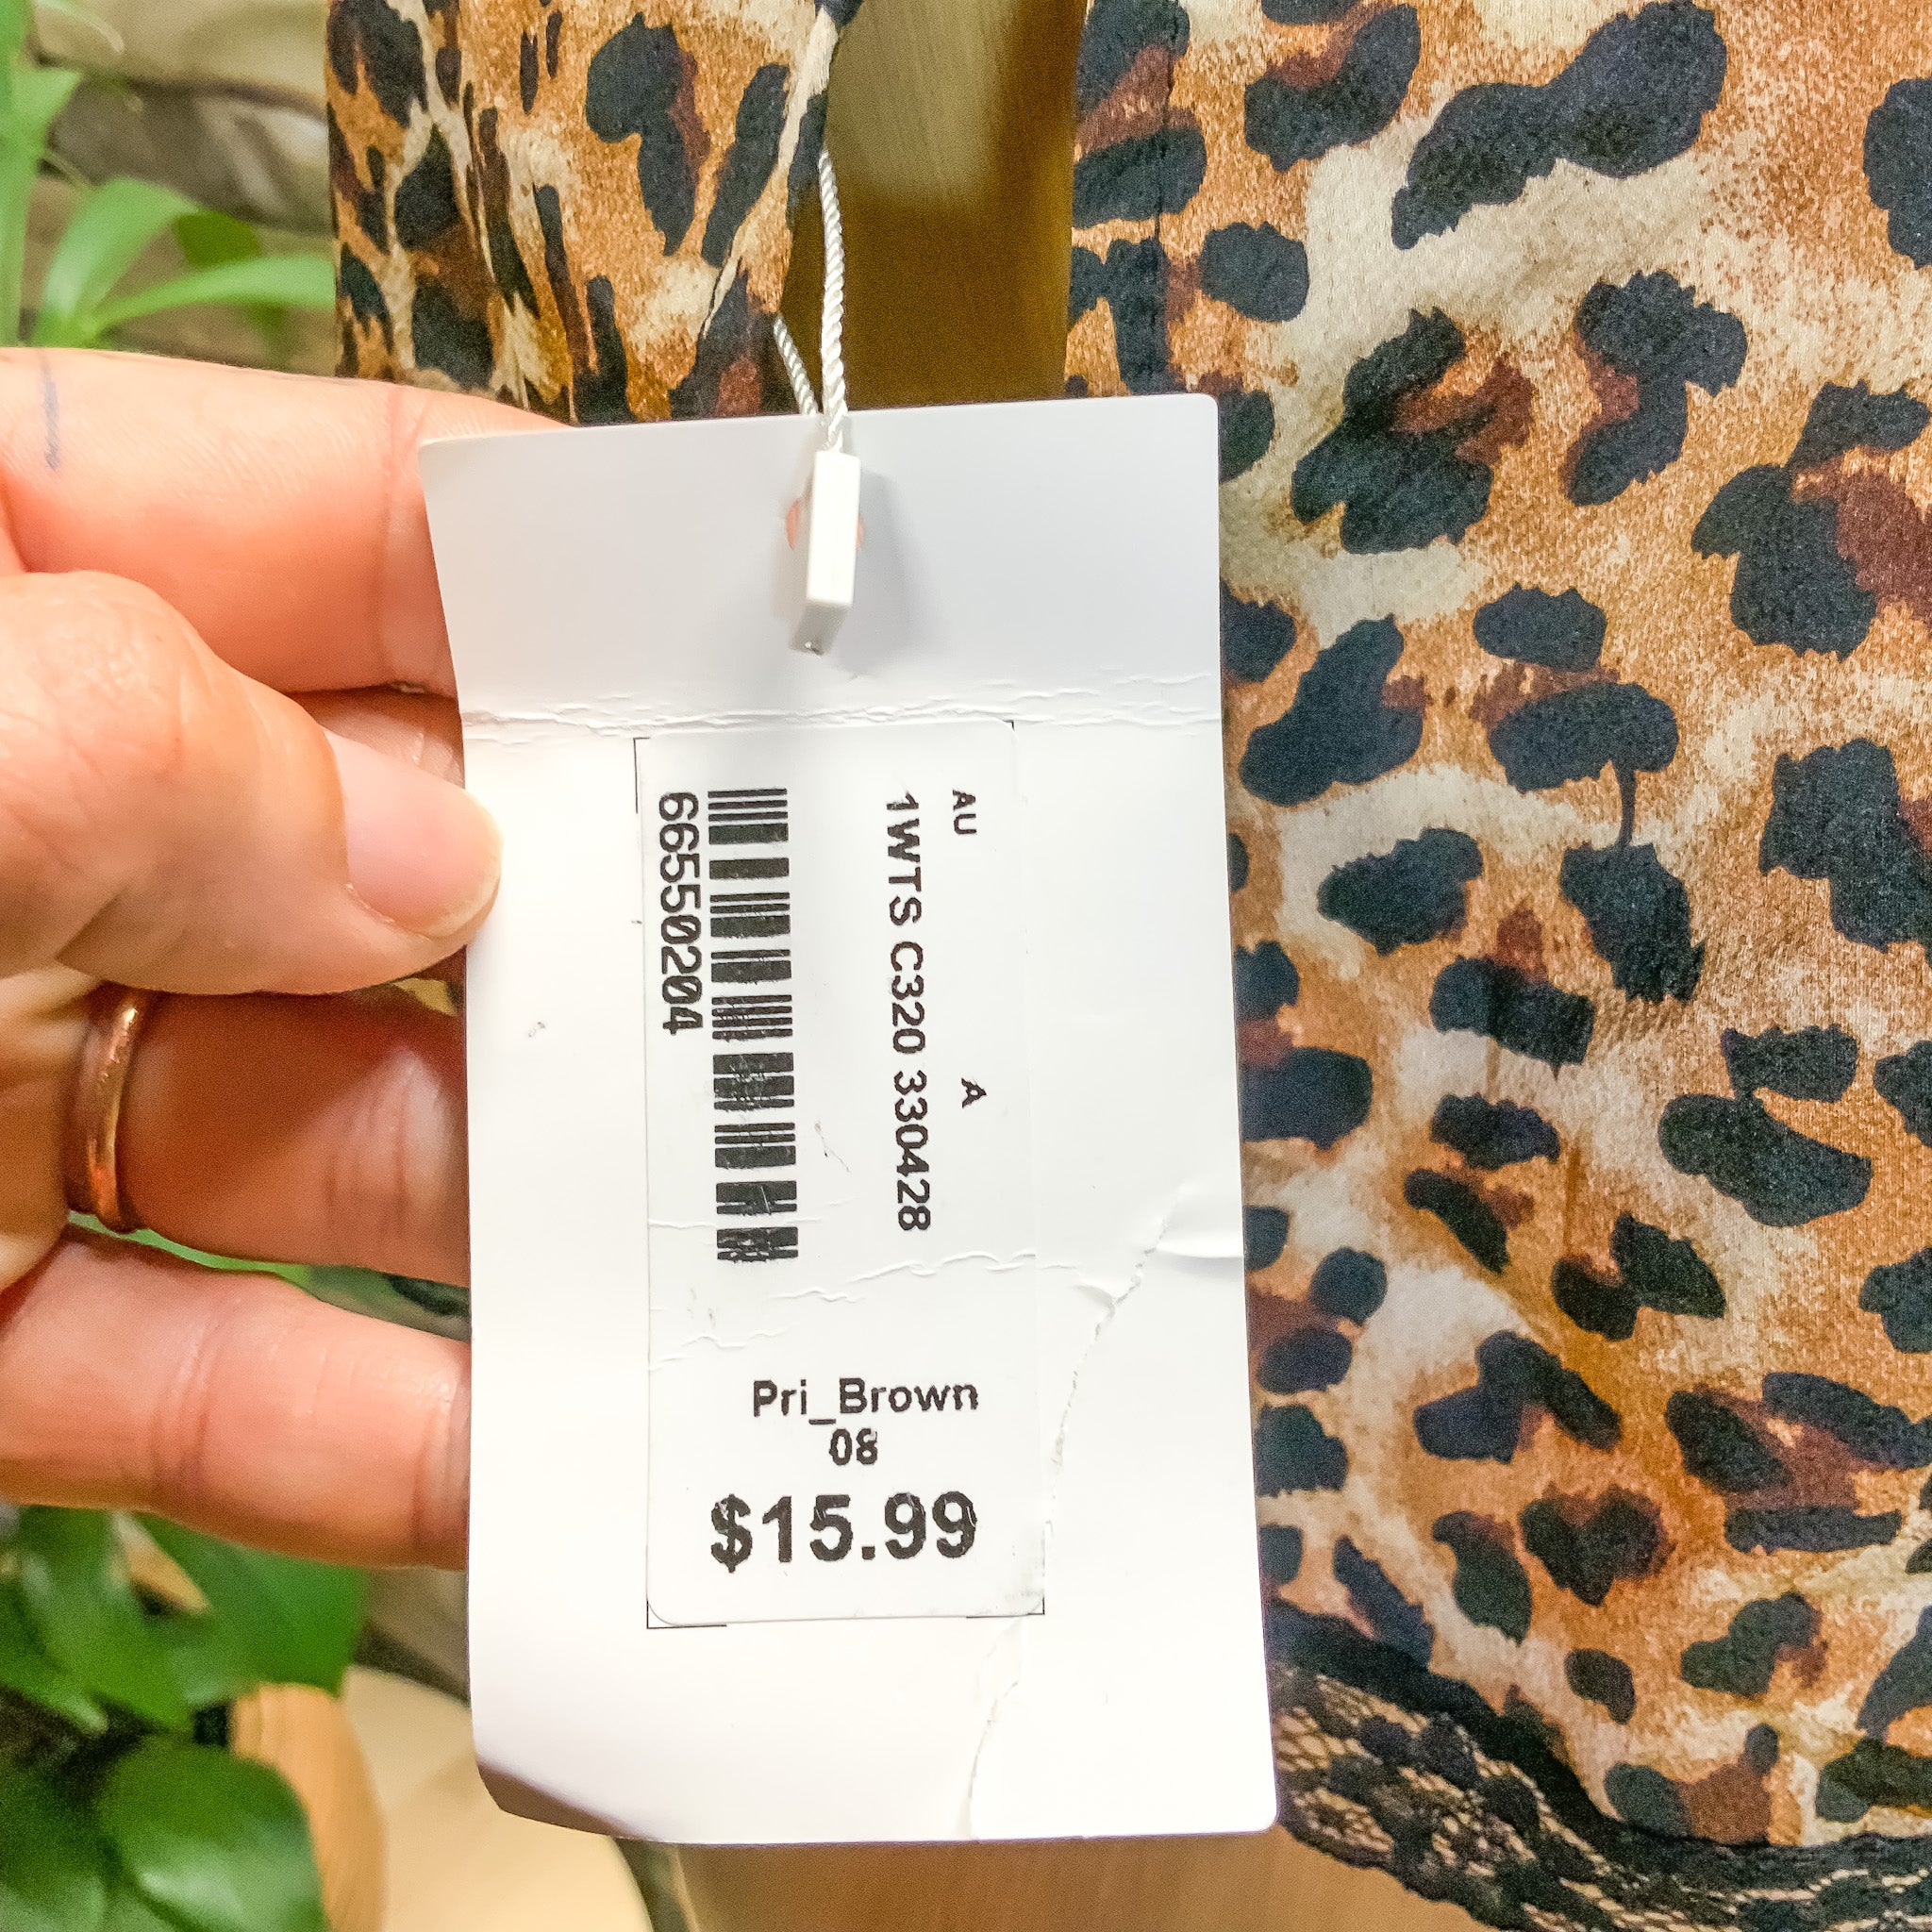 BNWT VALLEYGIRL Leopard Print Lace Trim Camisole Top - Size 8